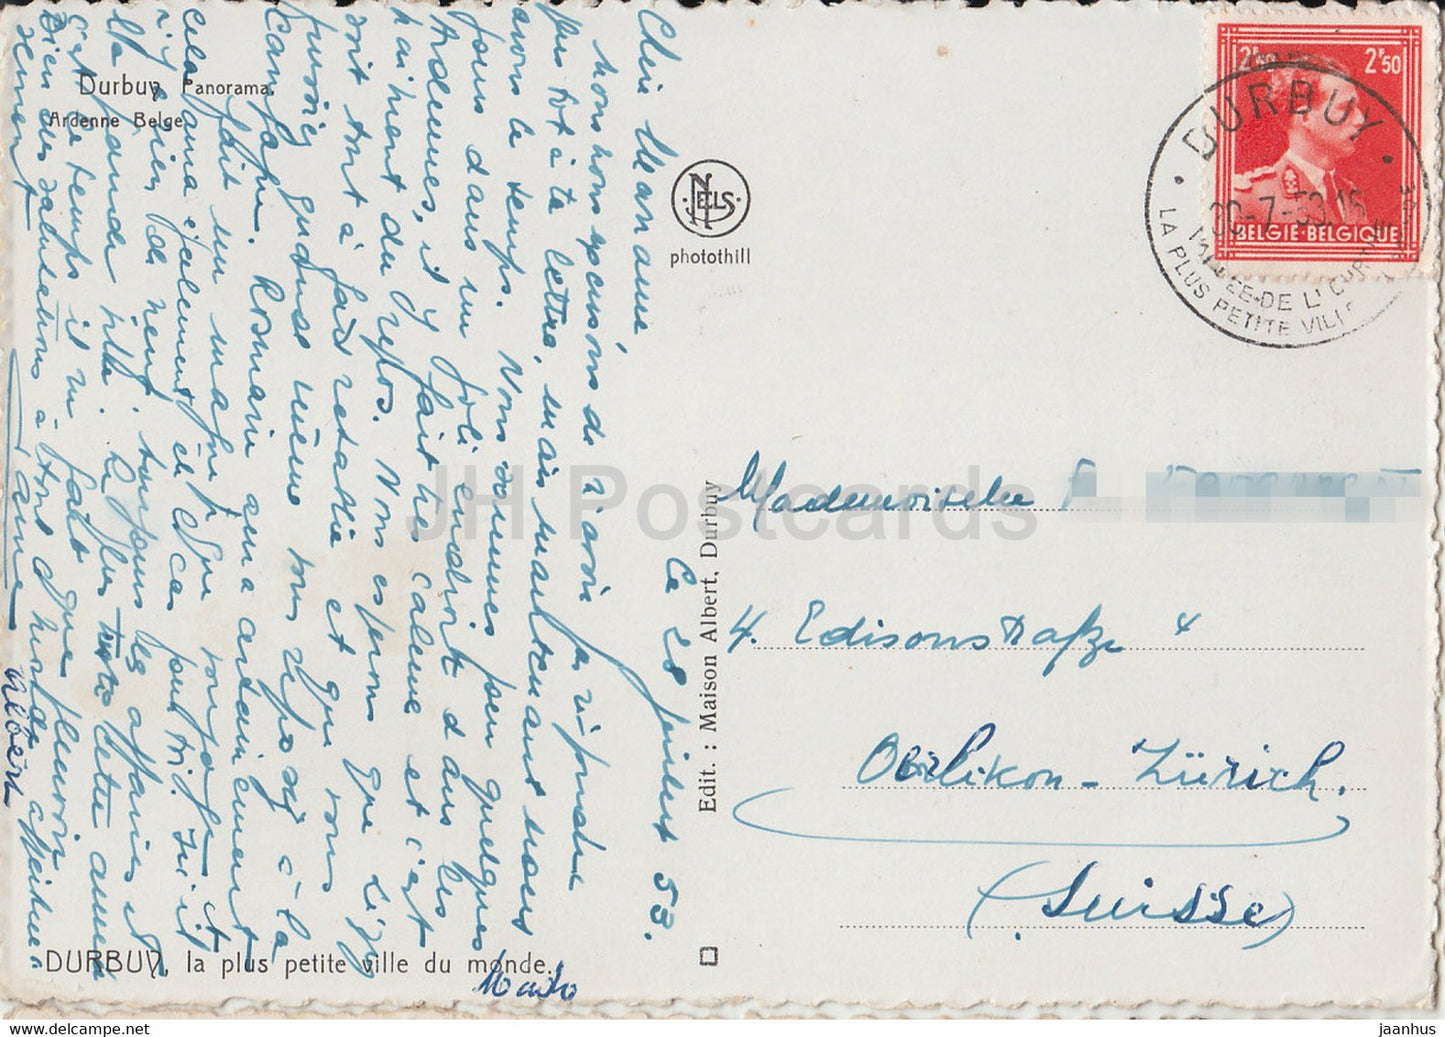 Durbuy - panorama - Ardenne Belge - old postcard - 1953 - Belgium - used